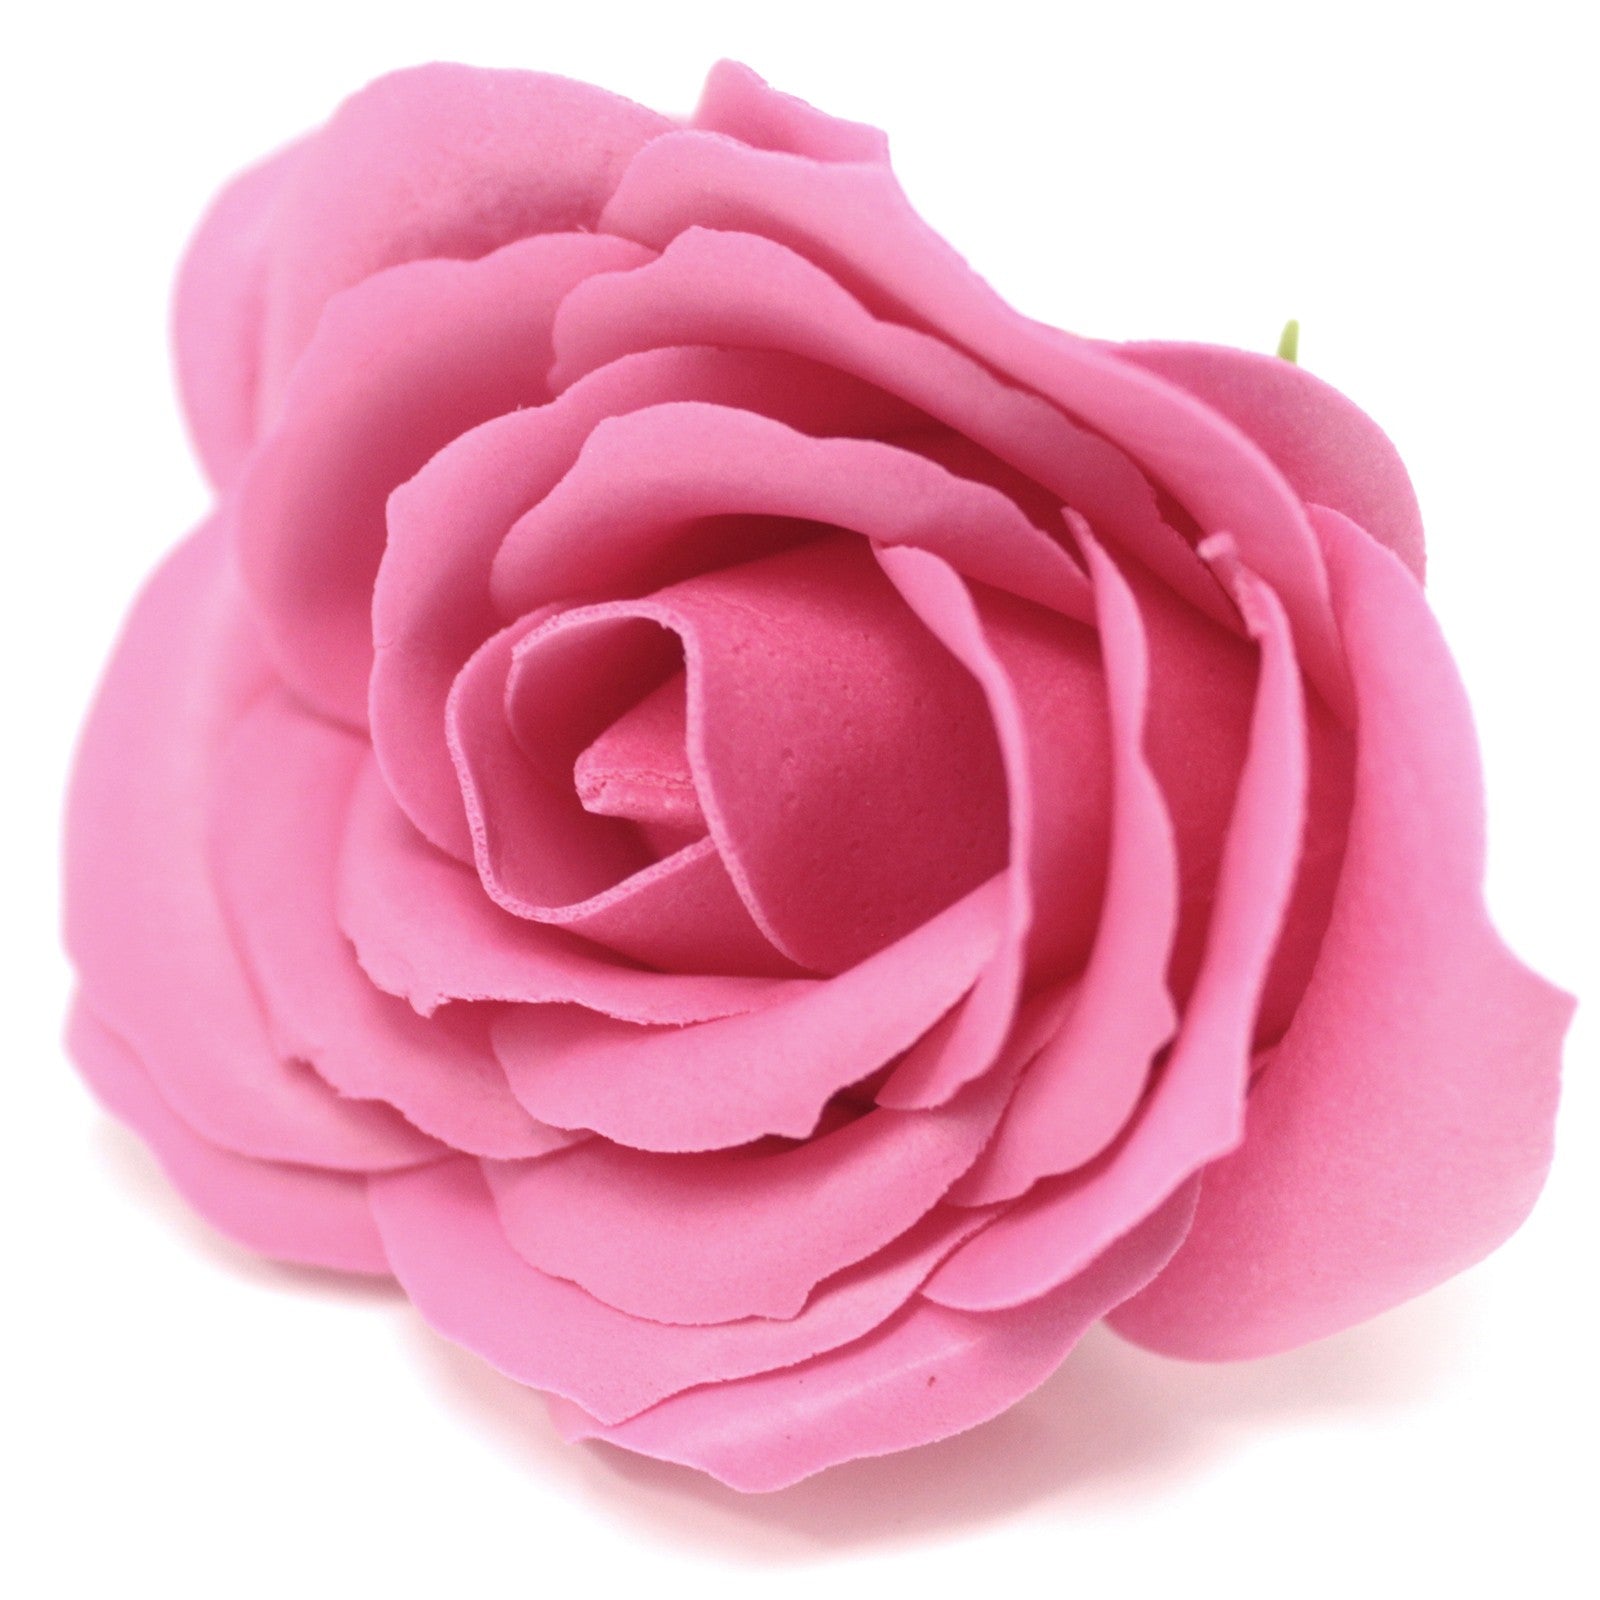 Craft Soap Flowers - Lrg Rose - Rose x 10 pcs